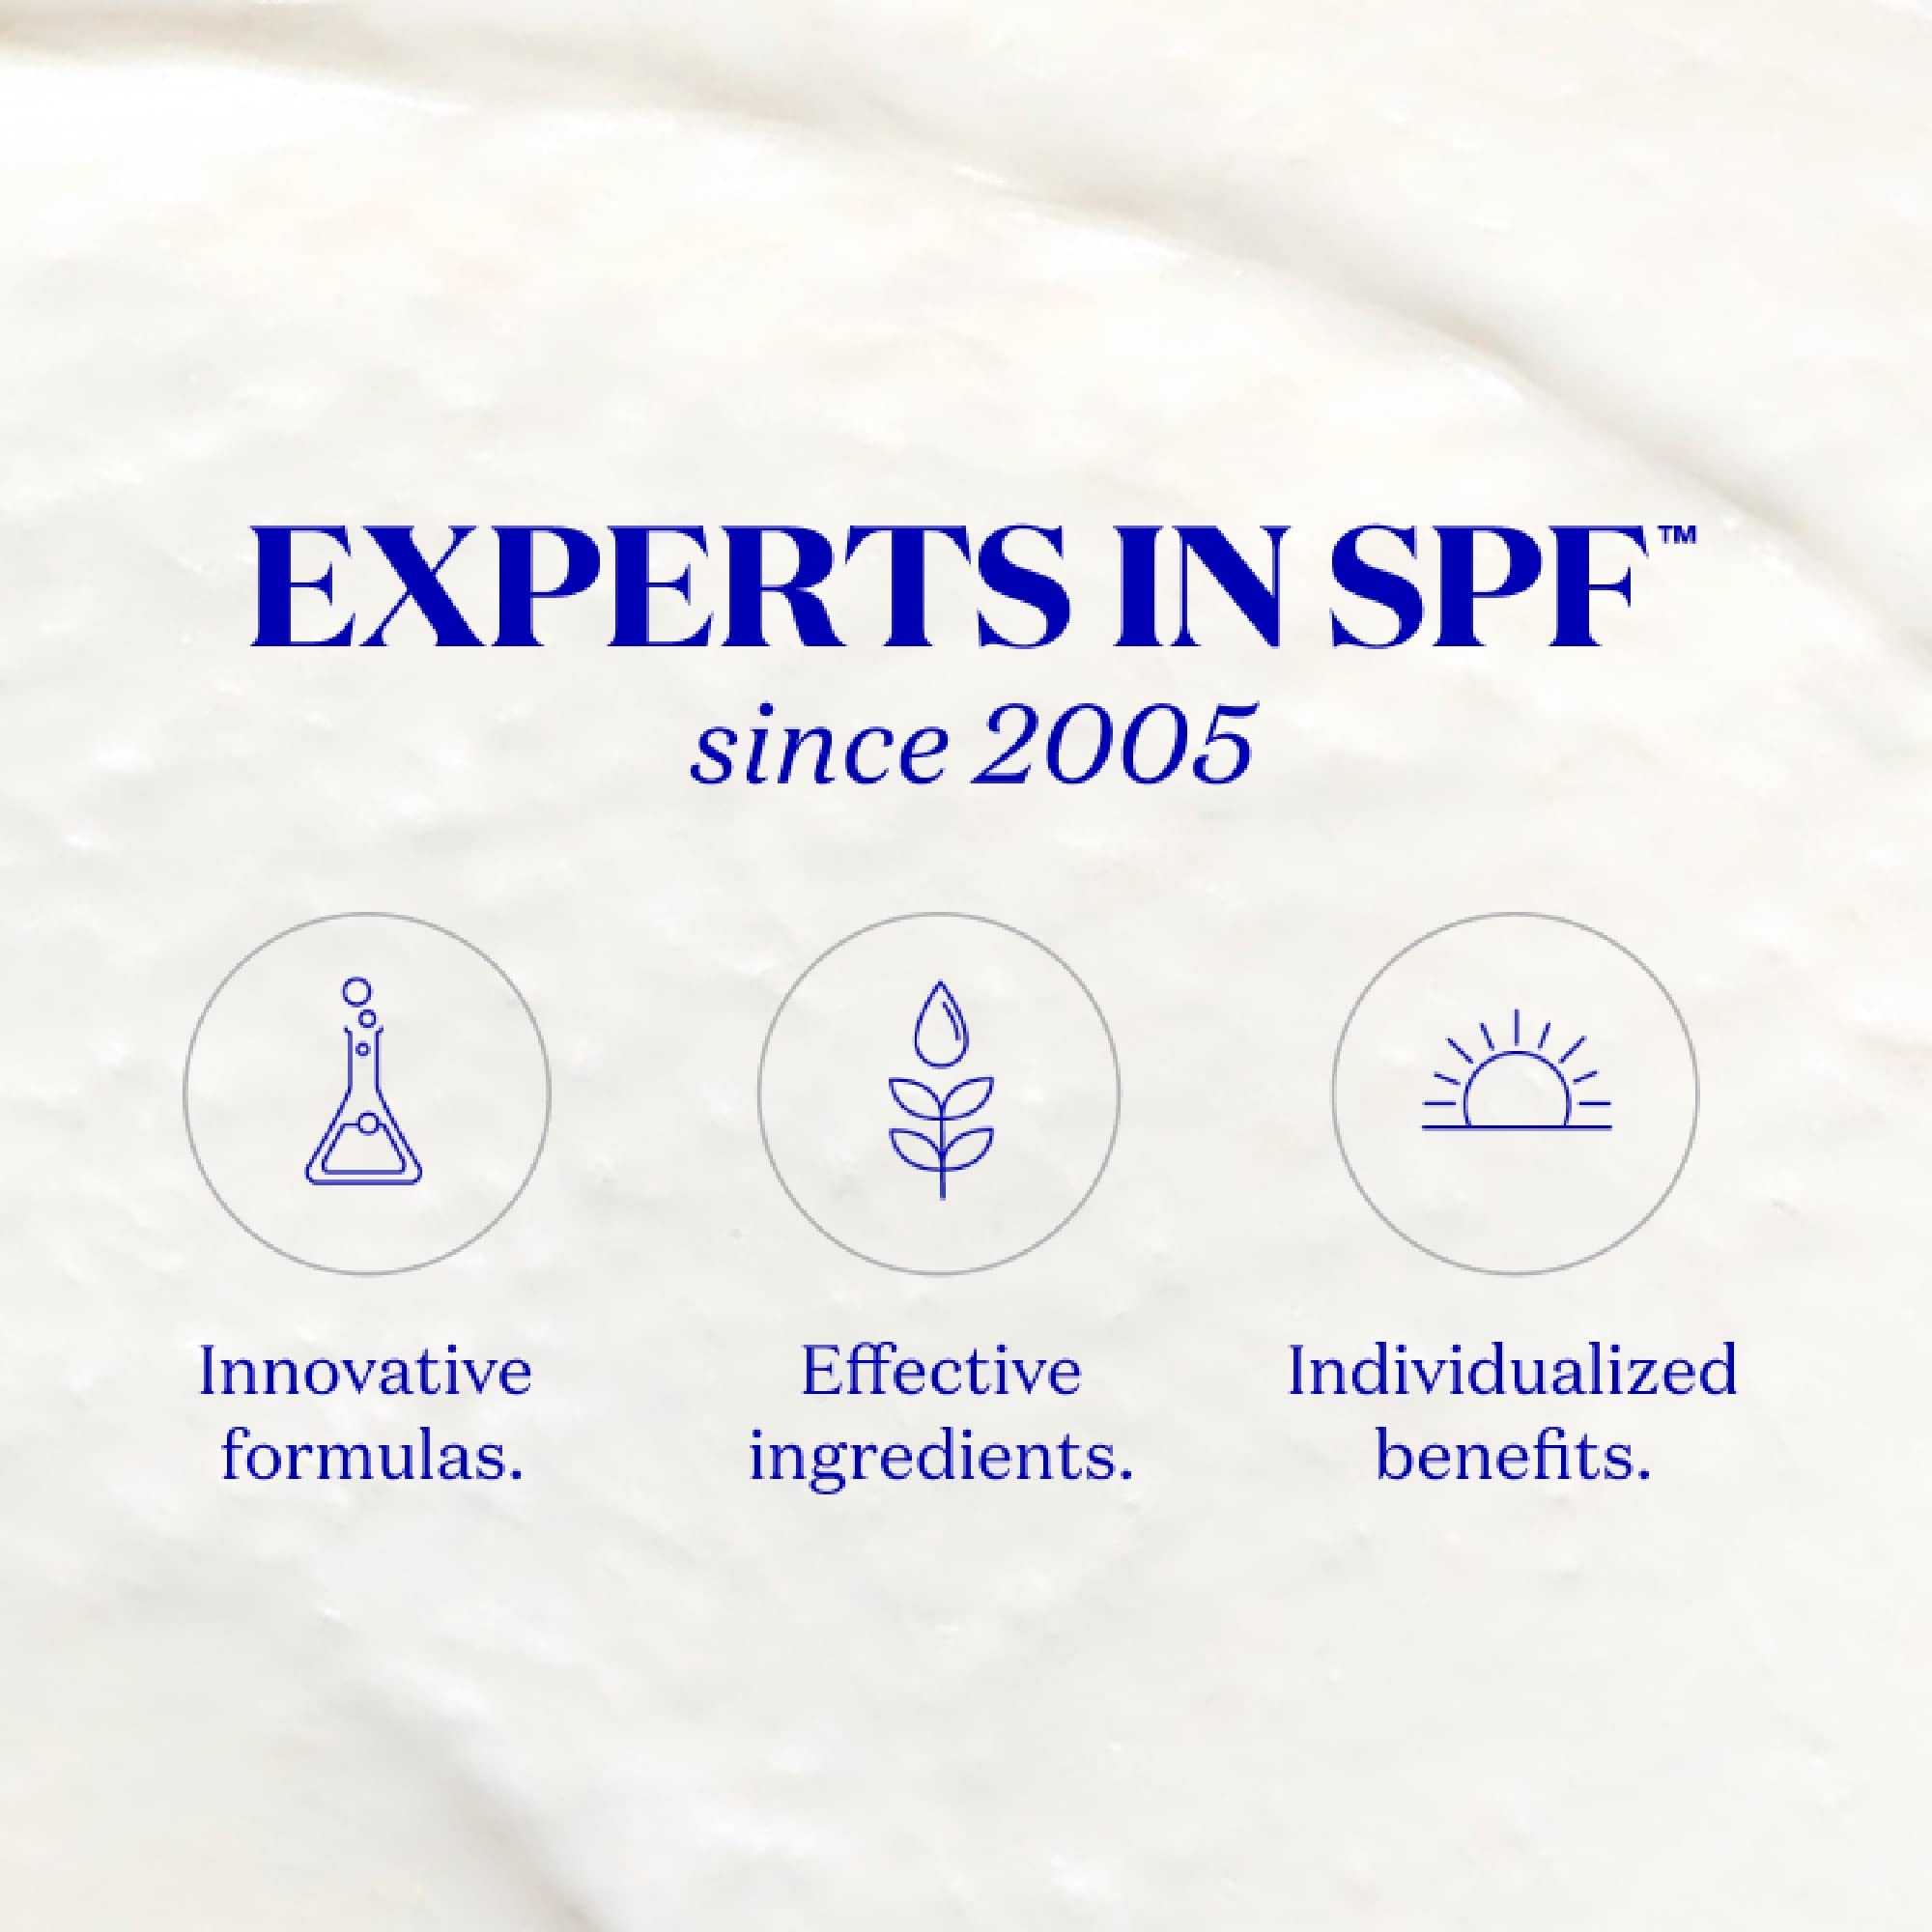 Supergoop! Sunnyscreen 100% Mineral Stick SPF 50, 0.7 oz - Face & Body Sunscreen for Babies & Kids - 100% Non-Nano Mineral Formula - Pediatrician Tested, Hypoallergenic, Fragrance & Silicone Free